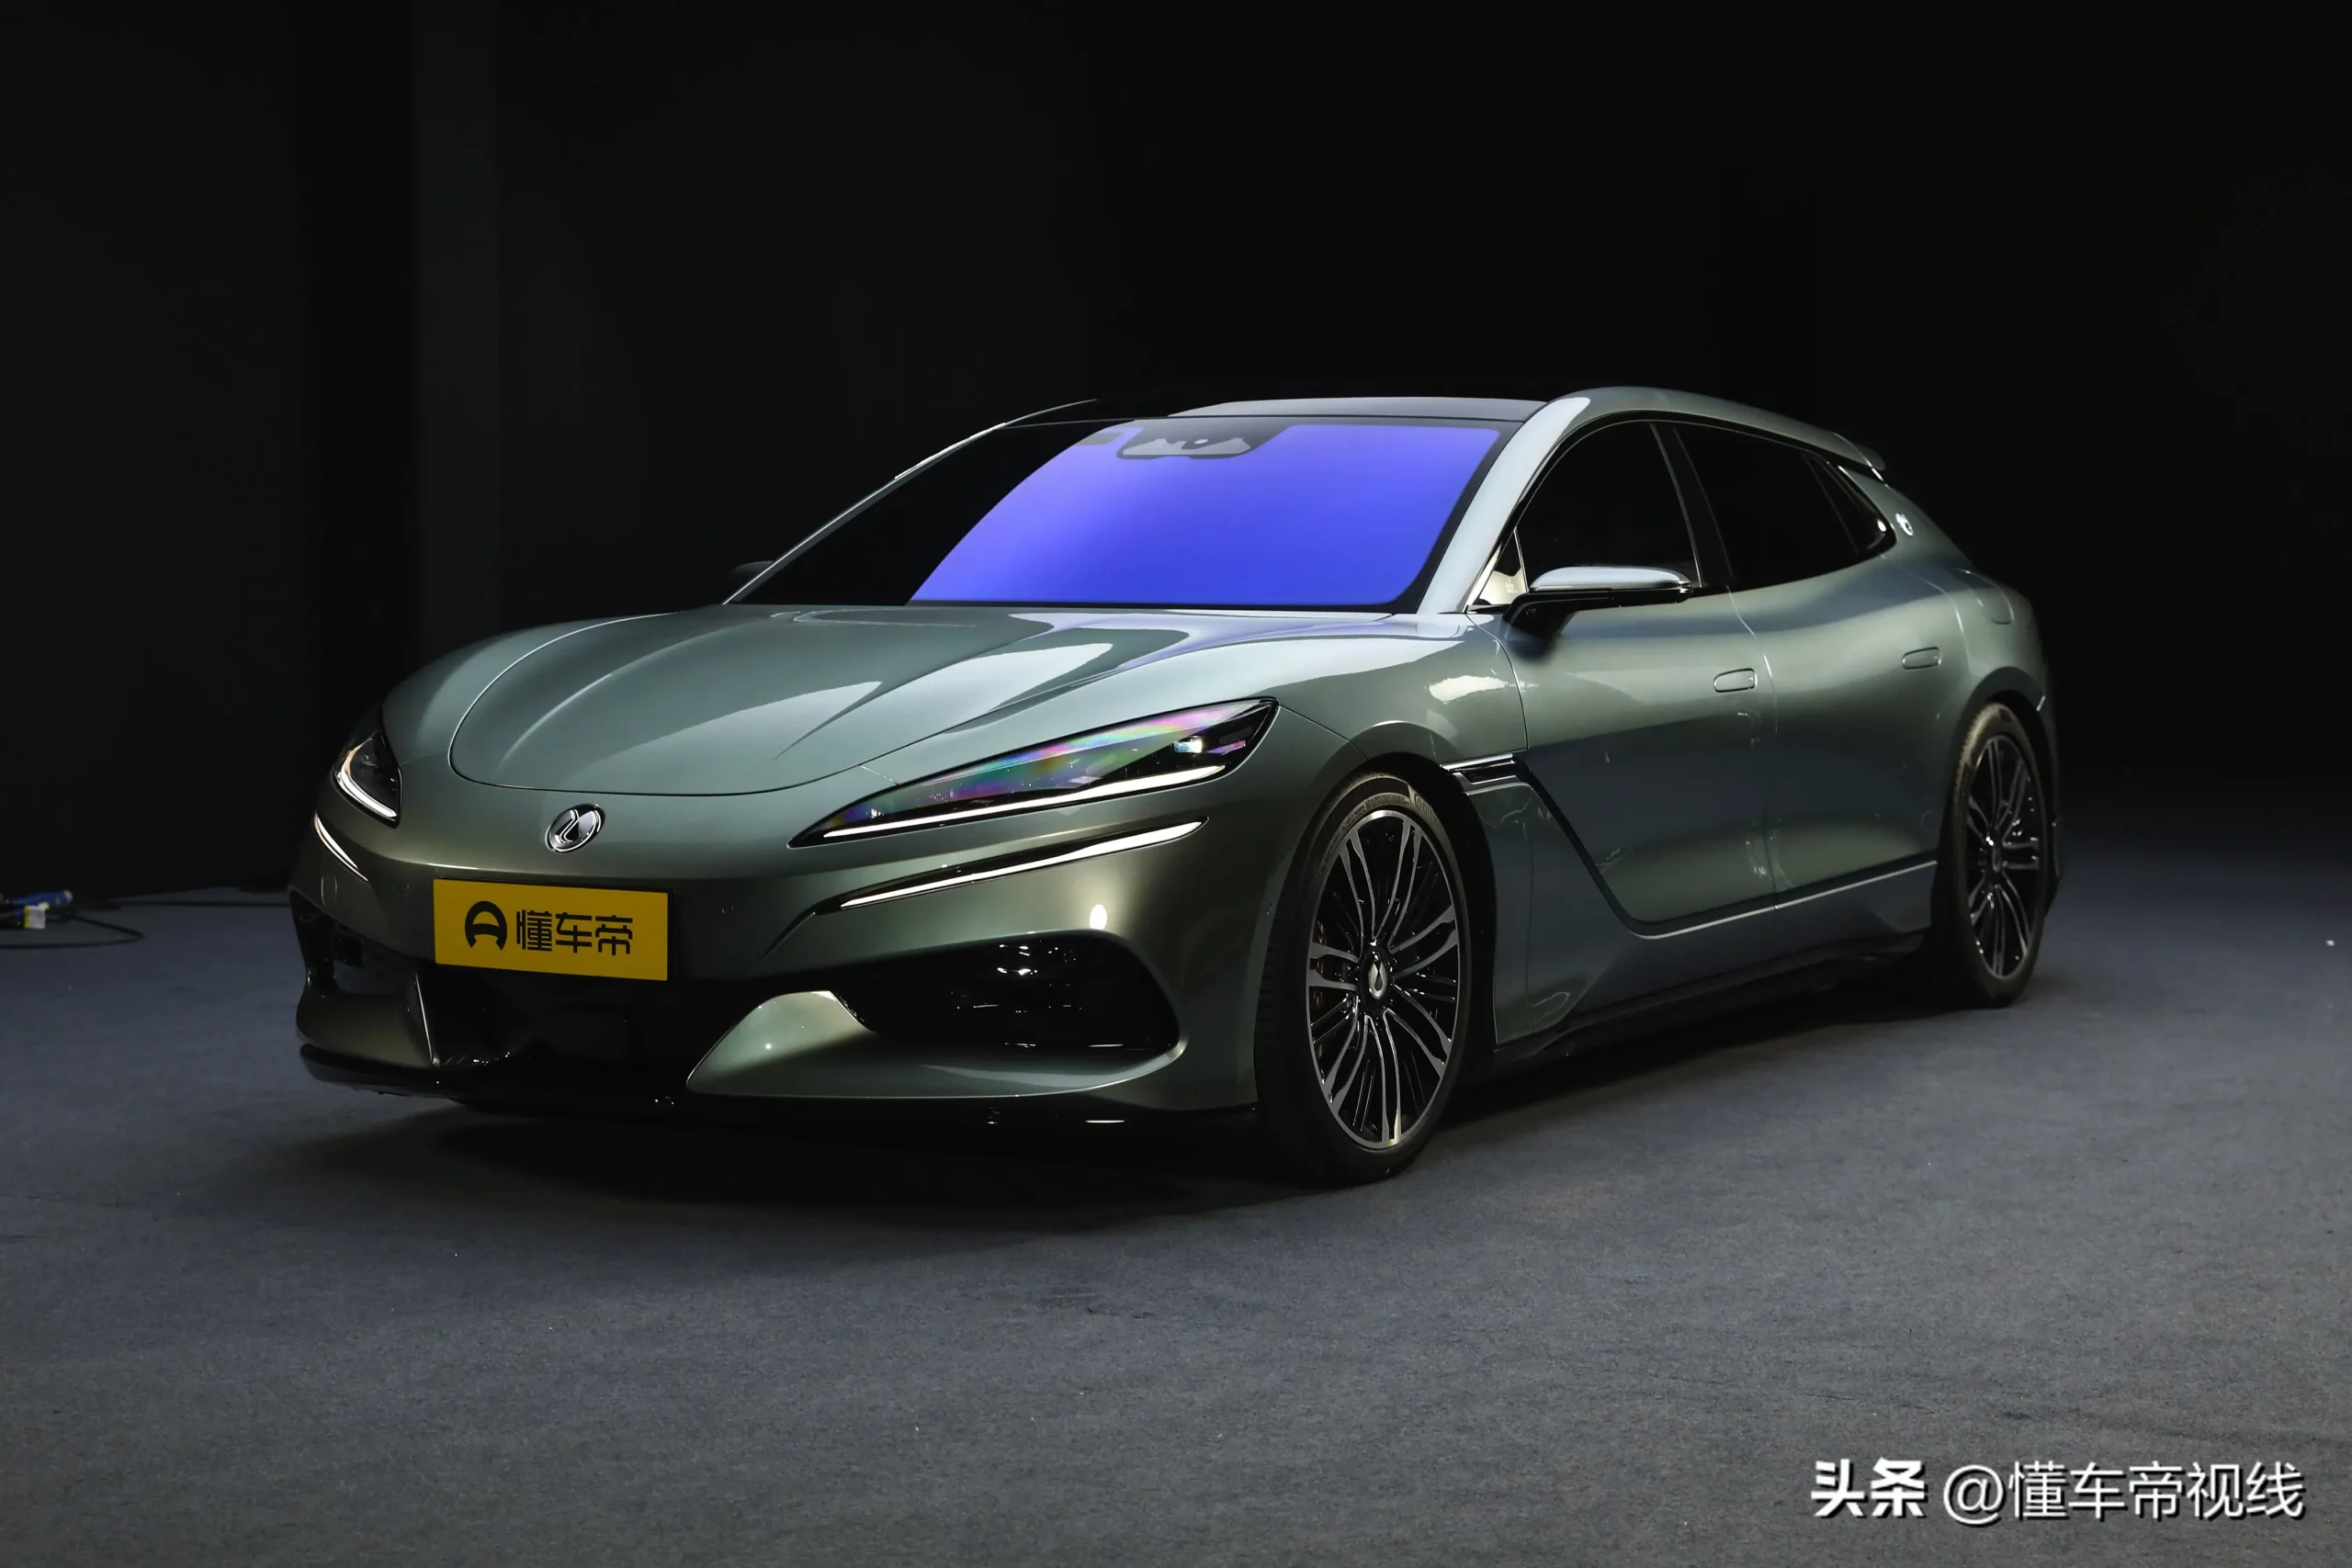 DENZA Z9 GT приобрести под заказ из Китая цена